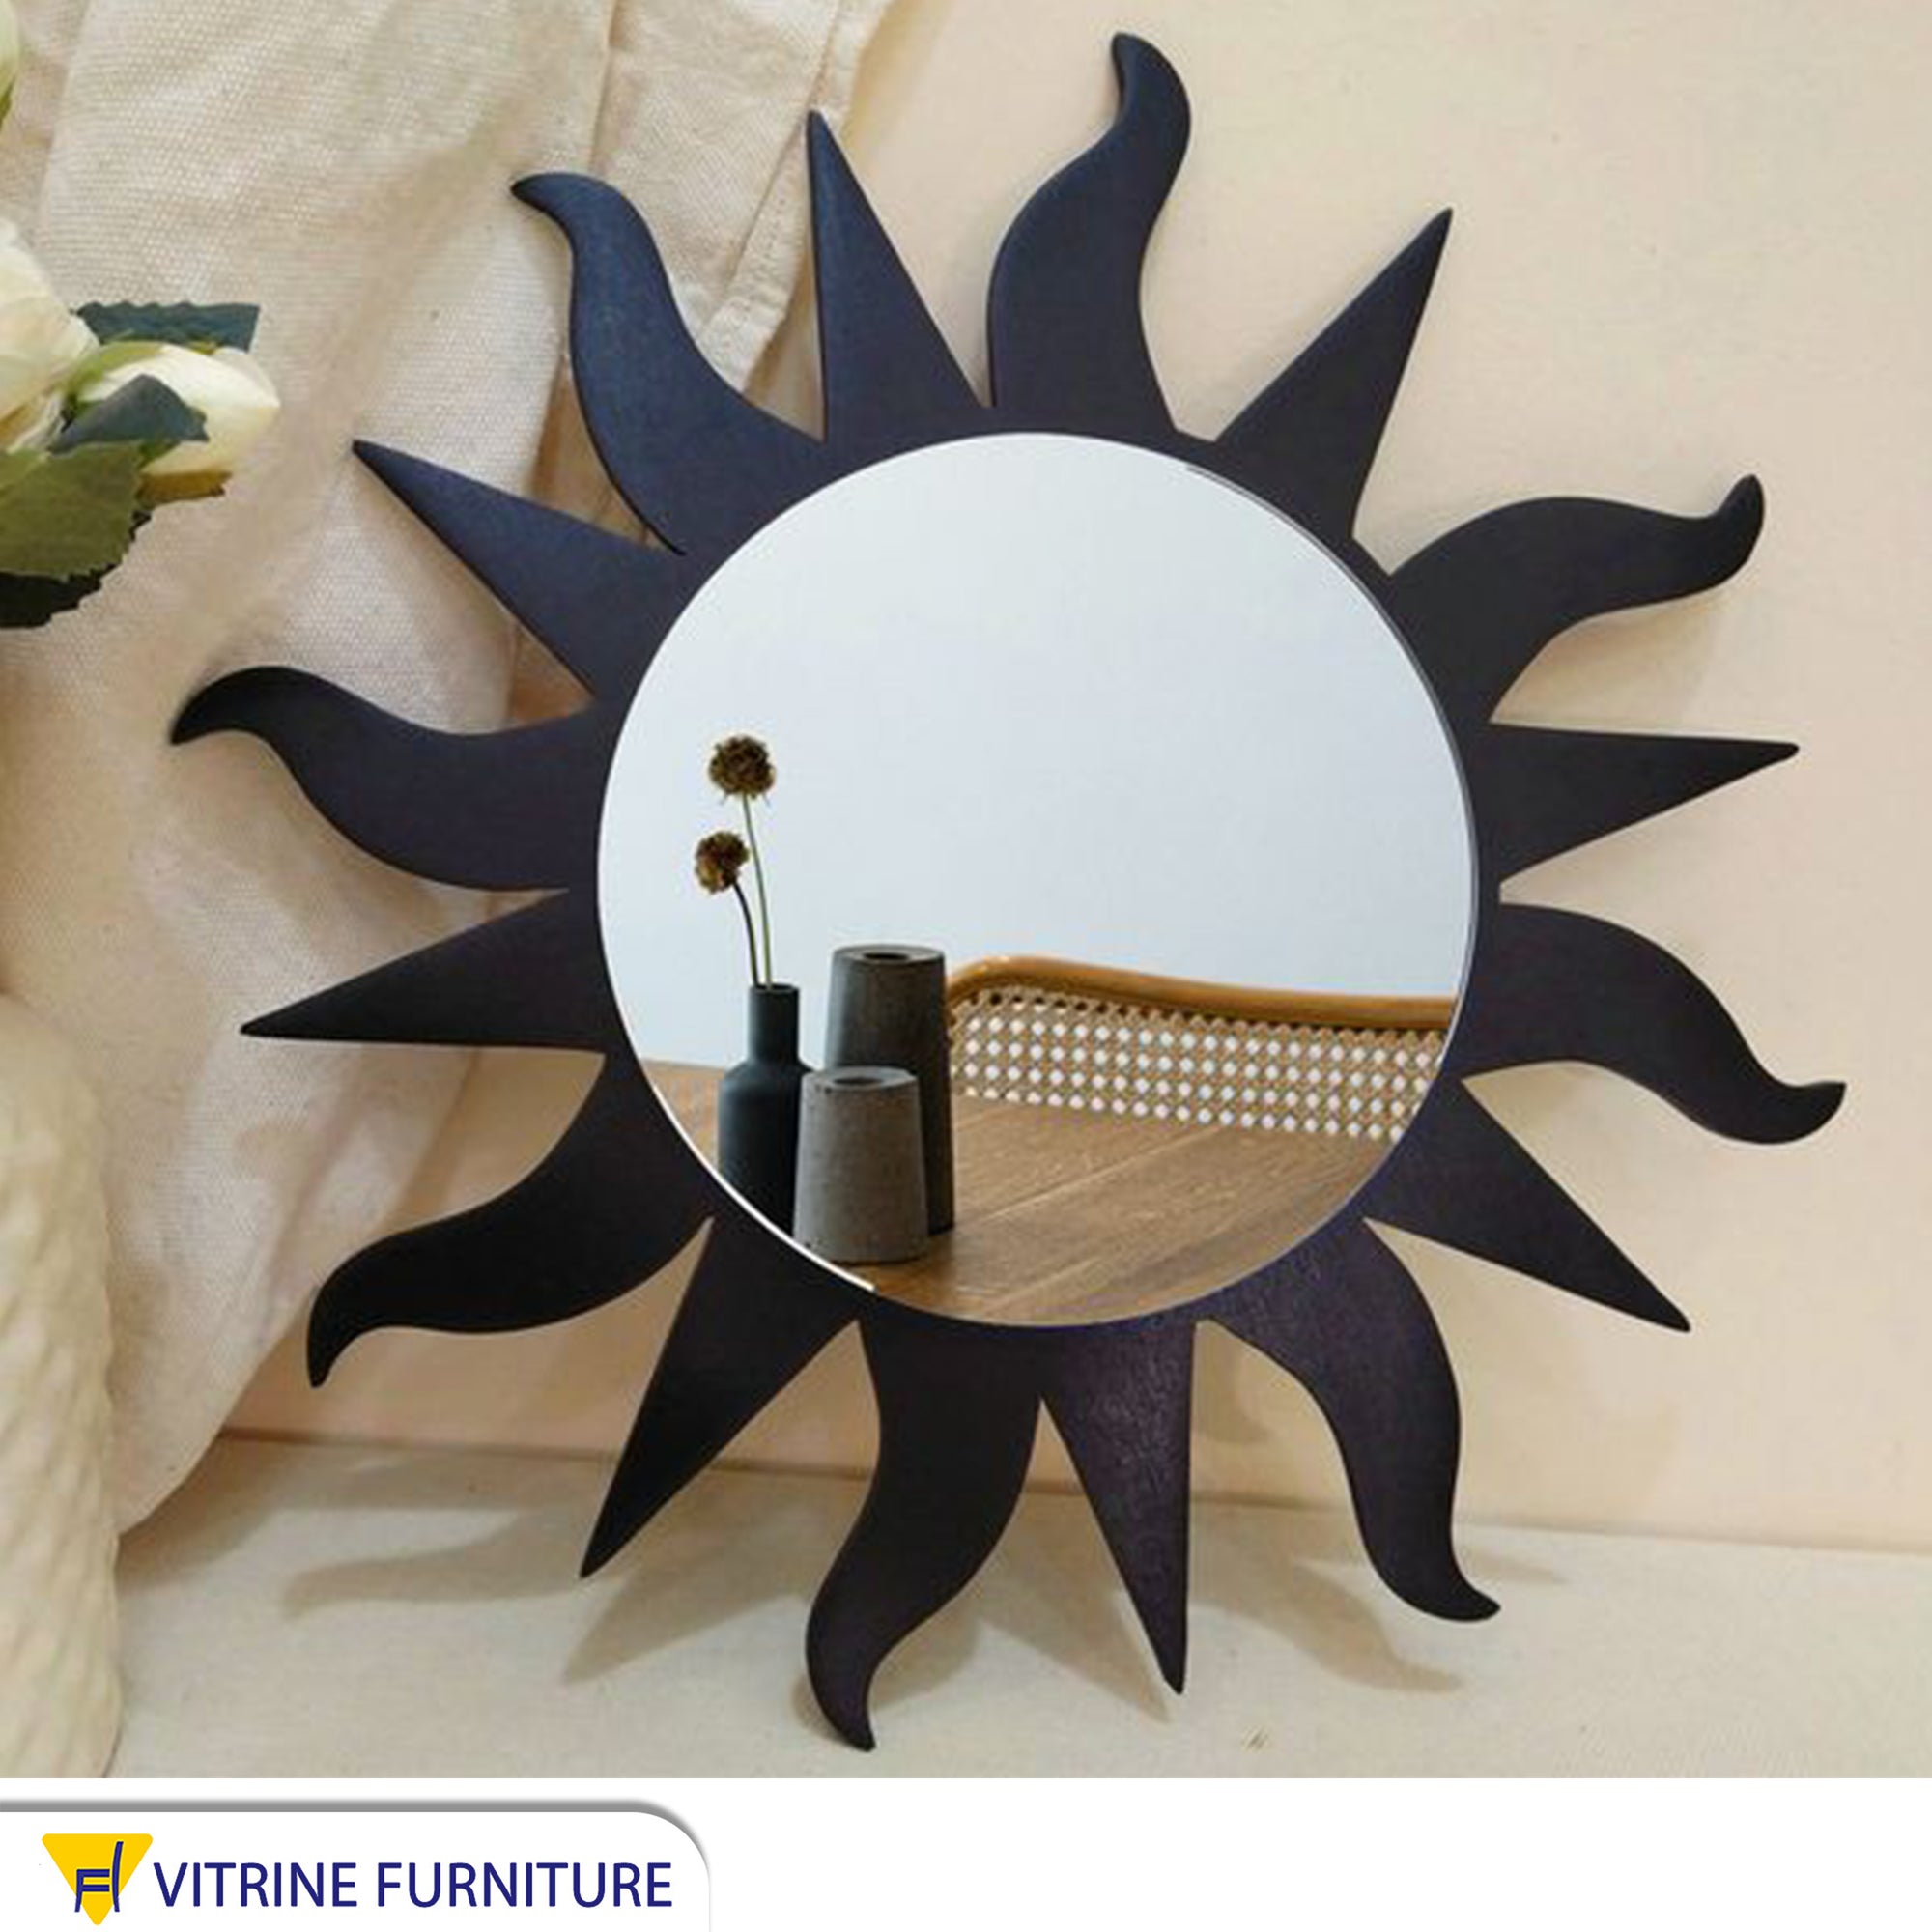 A mirror shaped like a sun and its rays